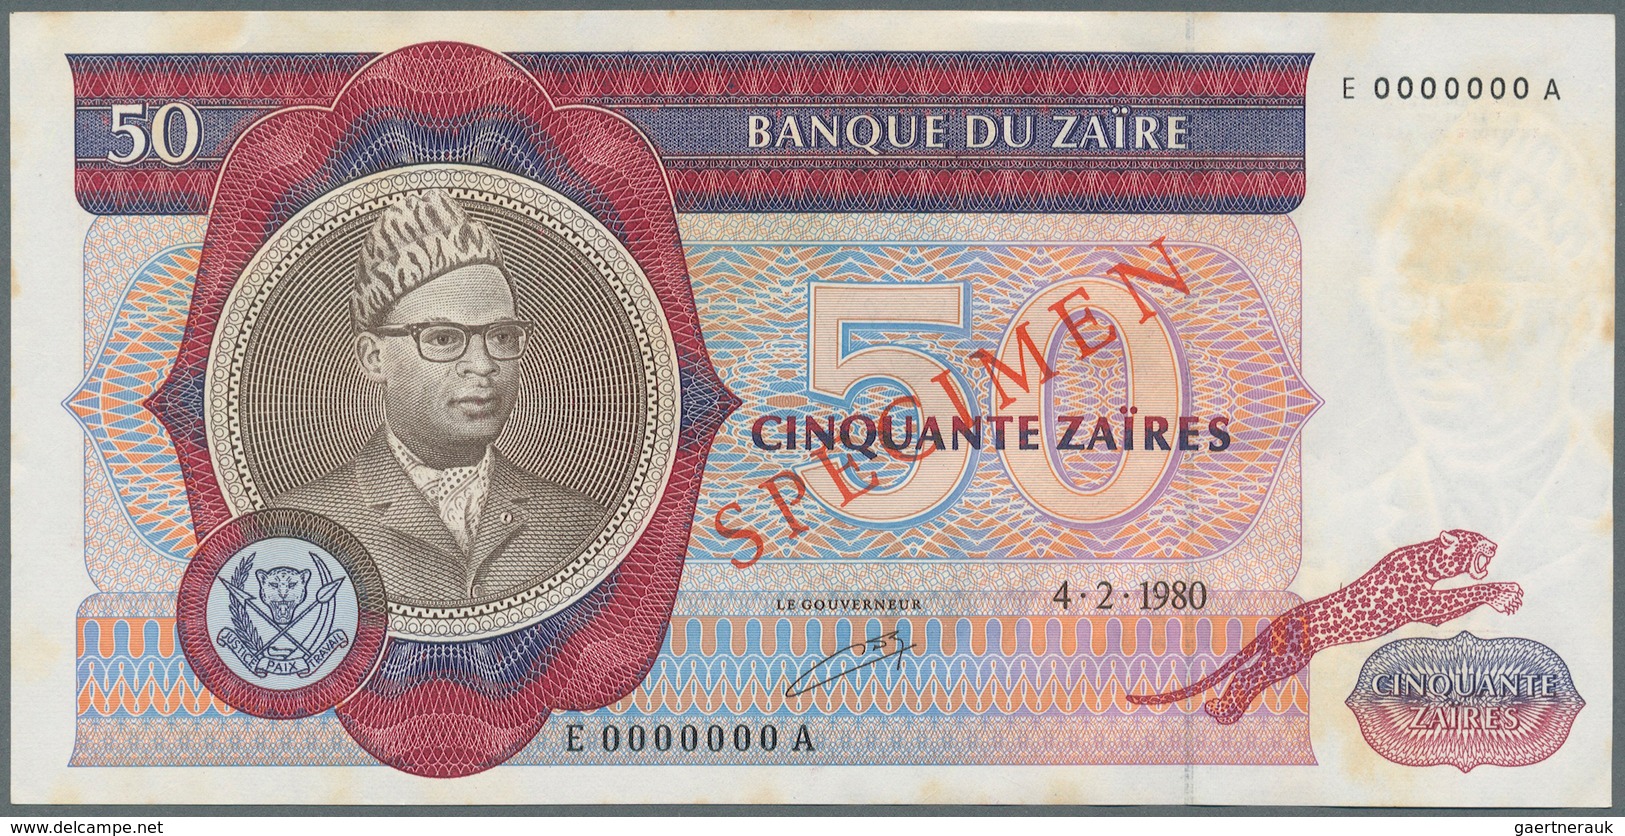 Zaire: Set Of 70 Banknotes Zaire 50 Zaires 1980 Specimen P. 25s With Red "Speicmen" Overprint At Cen - Zaïre